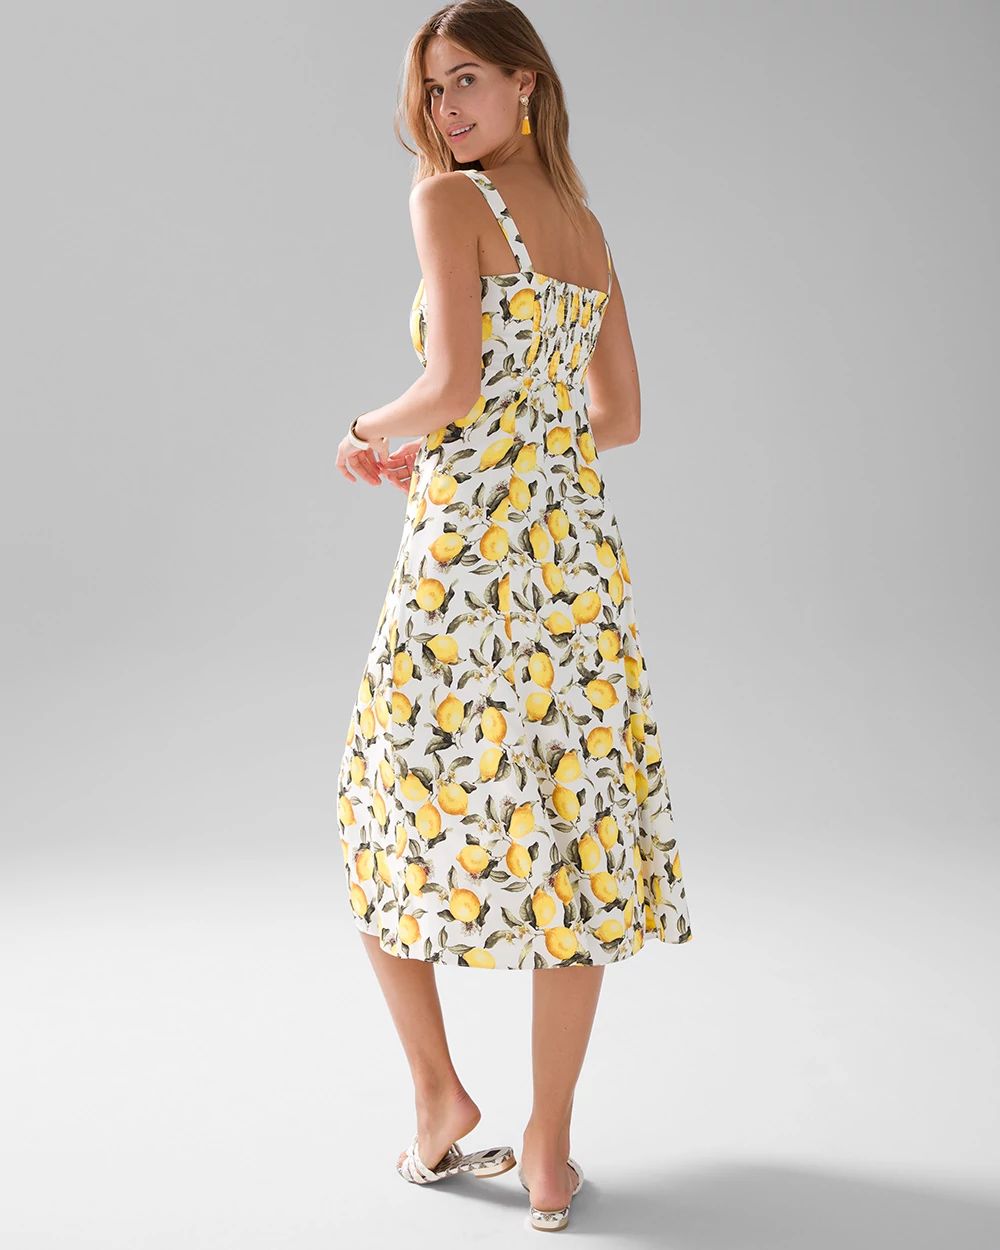 Petite Lemon Print Tie-Front Midi Dress click to view larger image.